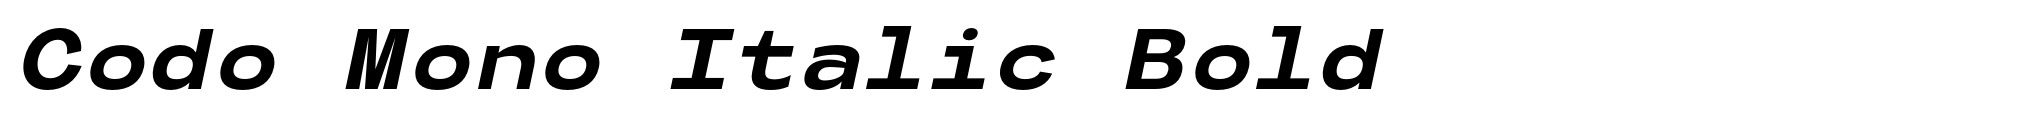 Codo Mono Italic Bold image